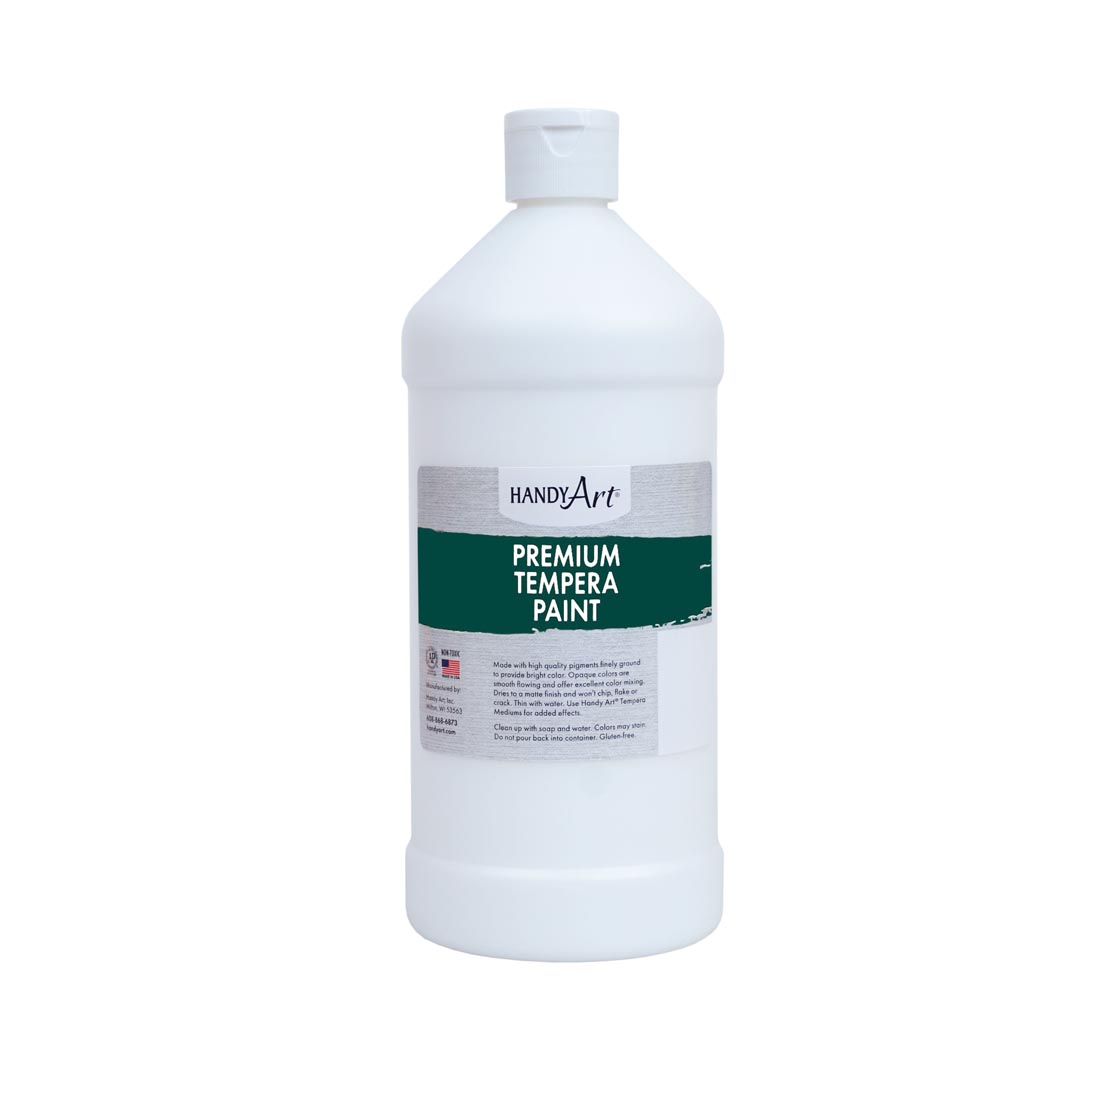 Quart bottle of White Handy Art Premium Tempera Paint